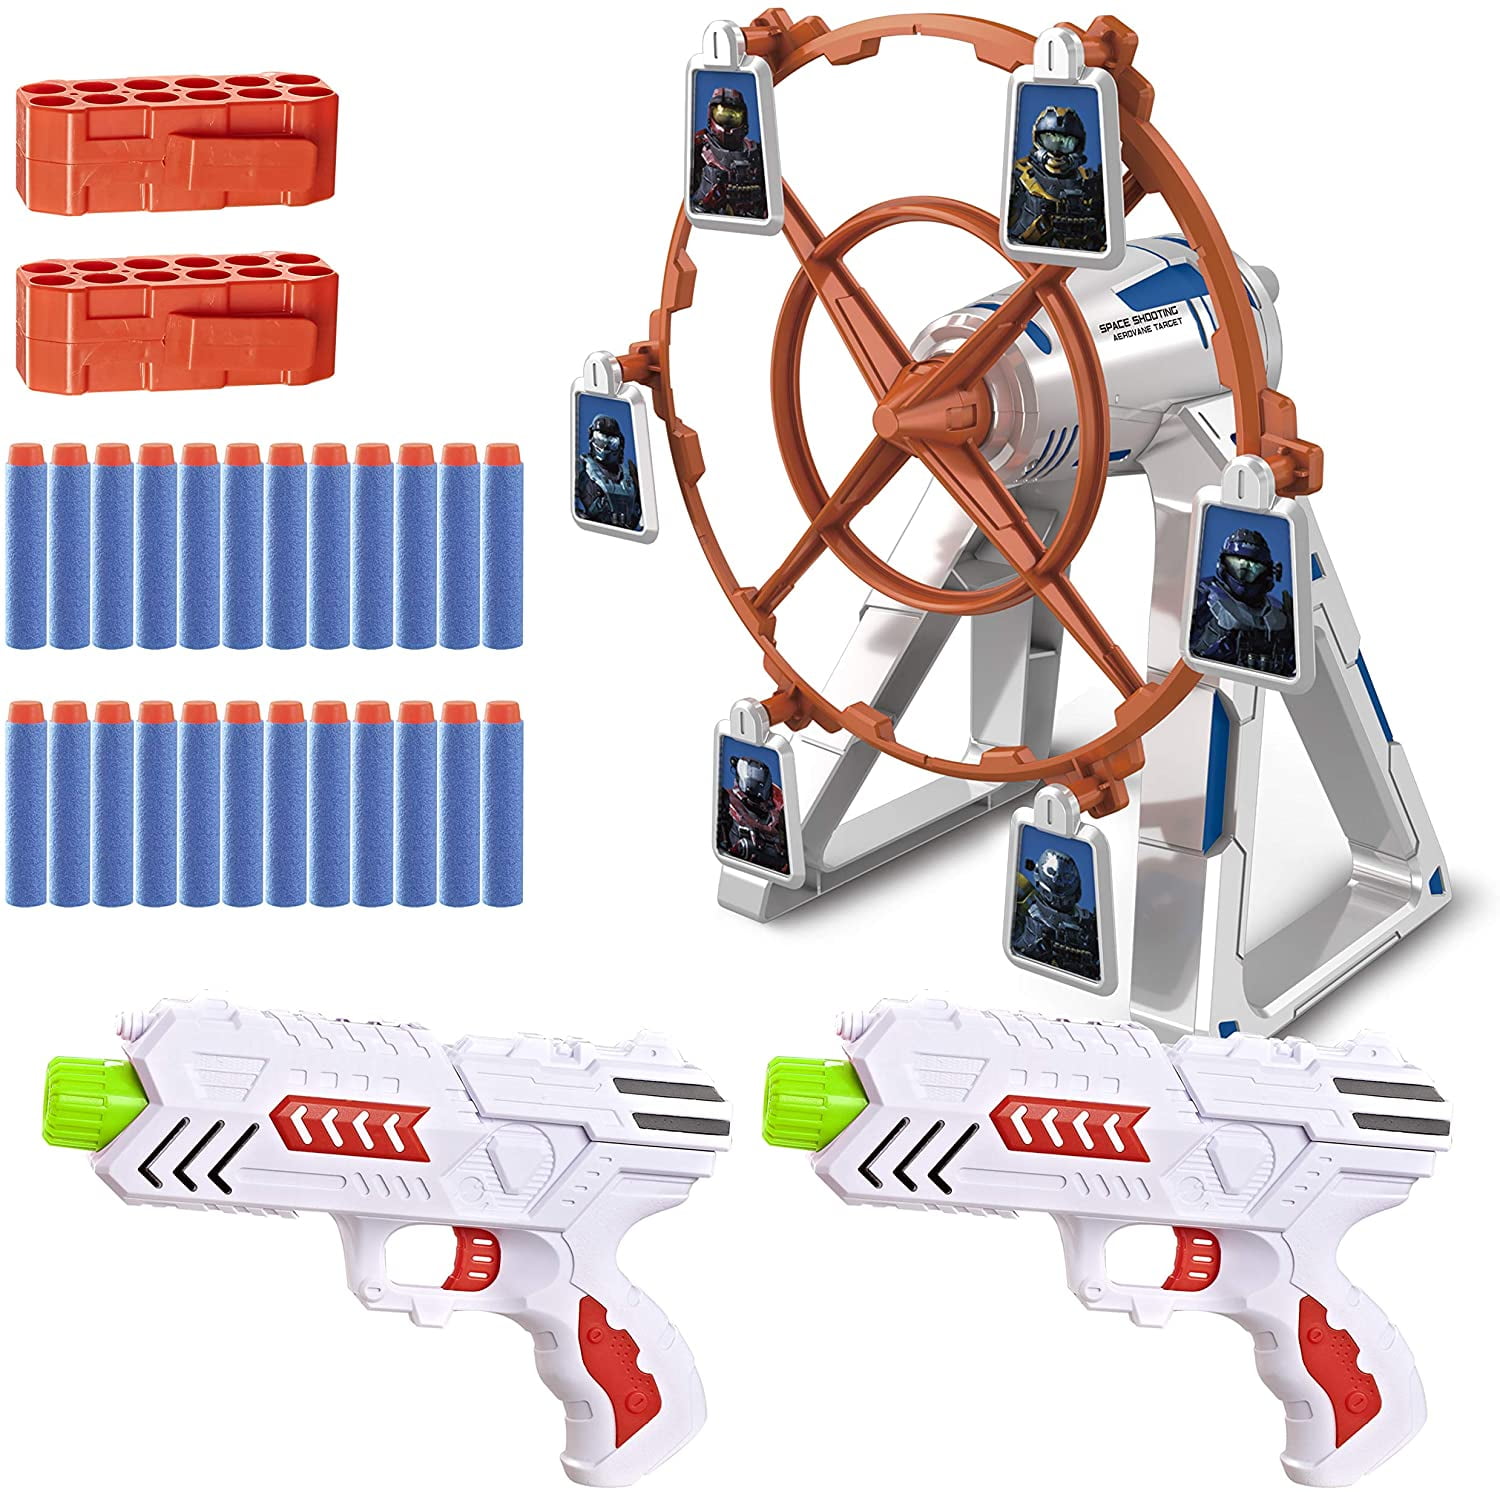 Precision Fast Firing Super Blaster Soft Bullet Set Nerf style Toy Target Game 